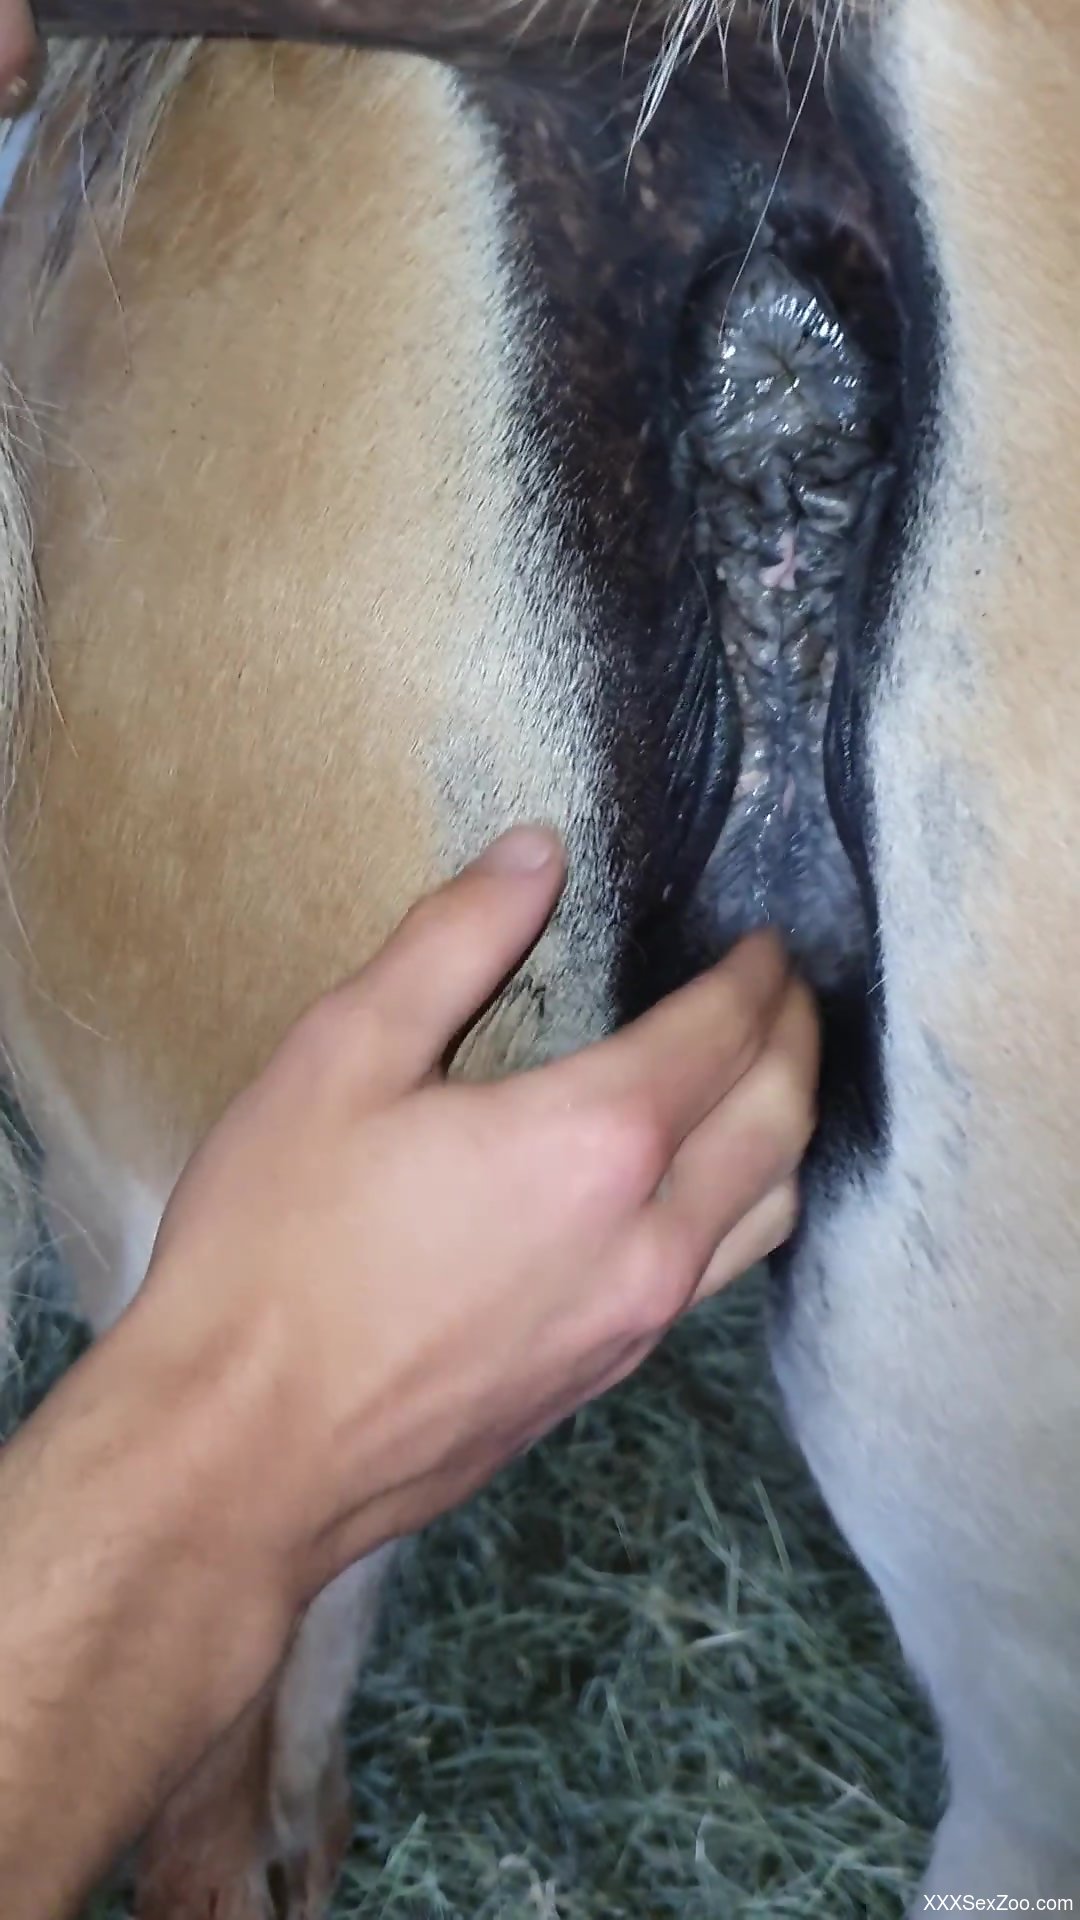 Xxx Horsh - Horny guy finger fucks his female horse in harsh modes - XXXSexZoo.com